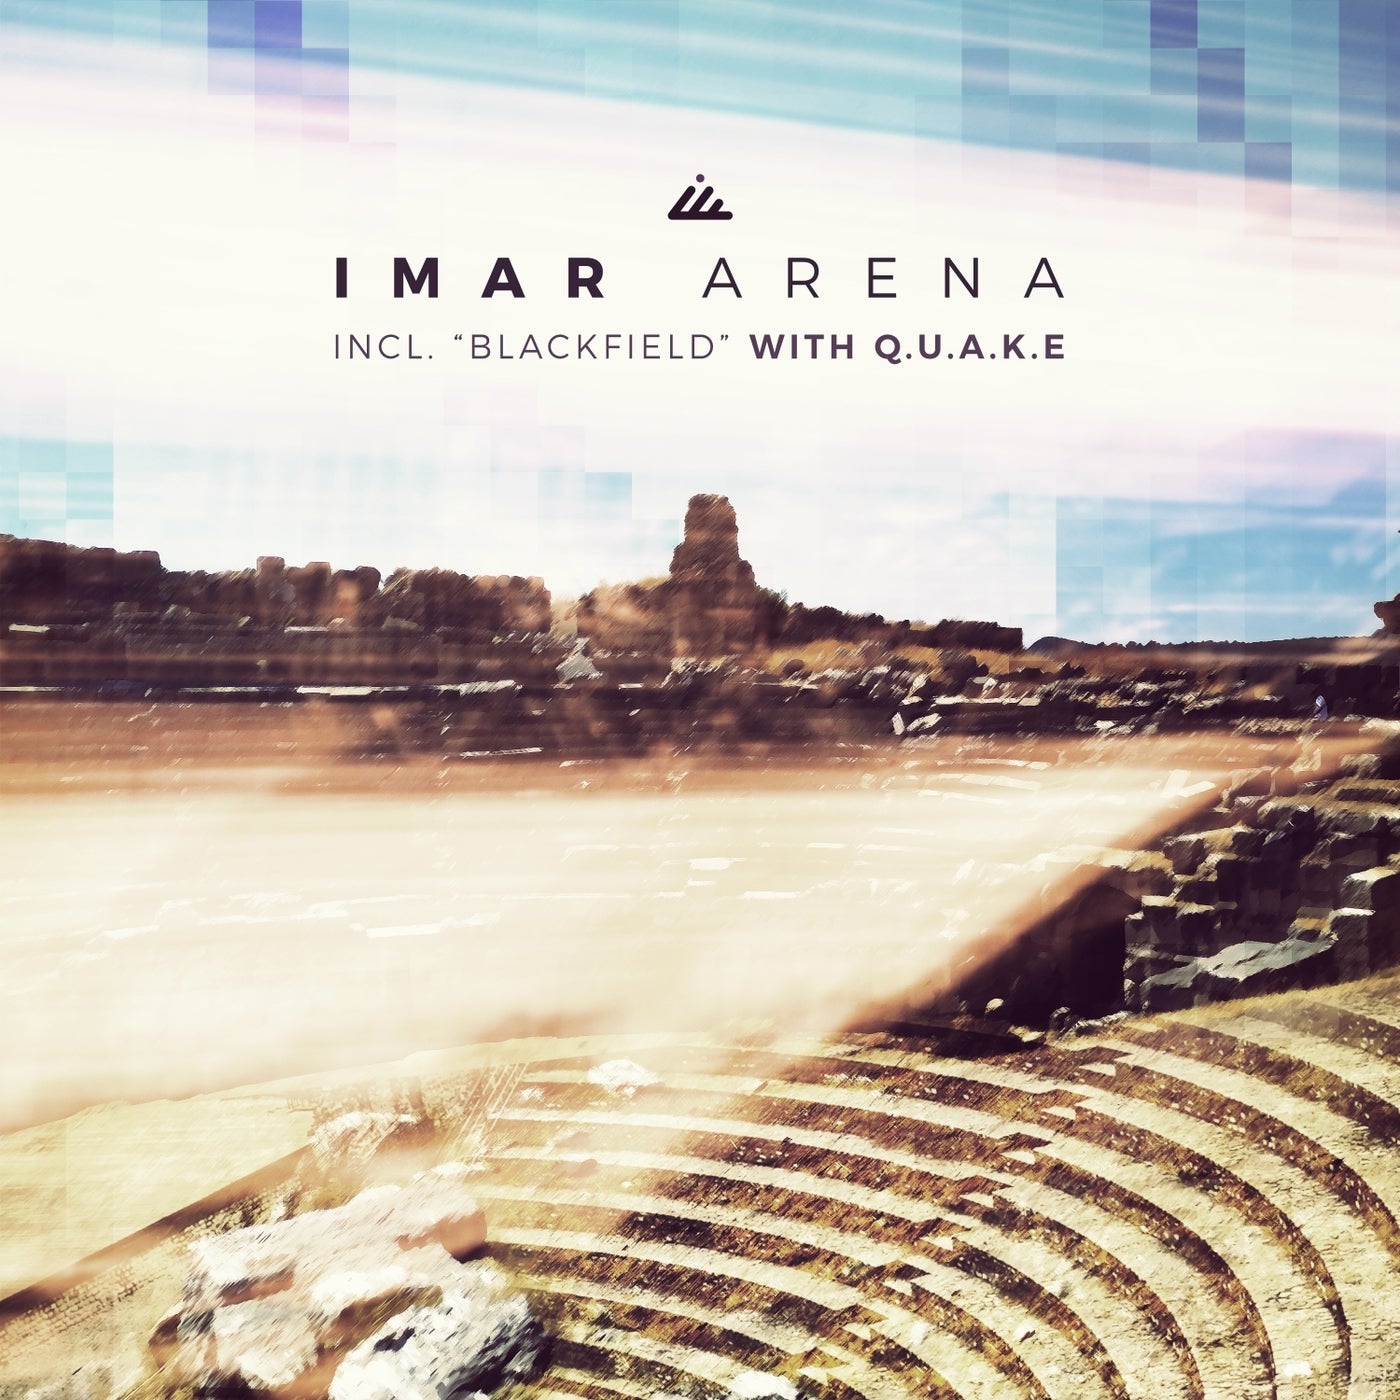 Imar - Arena (Original Mix)